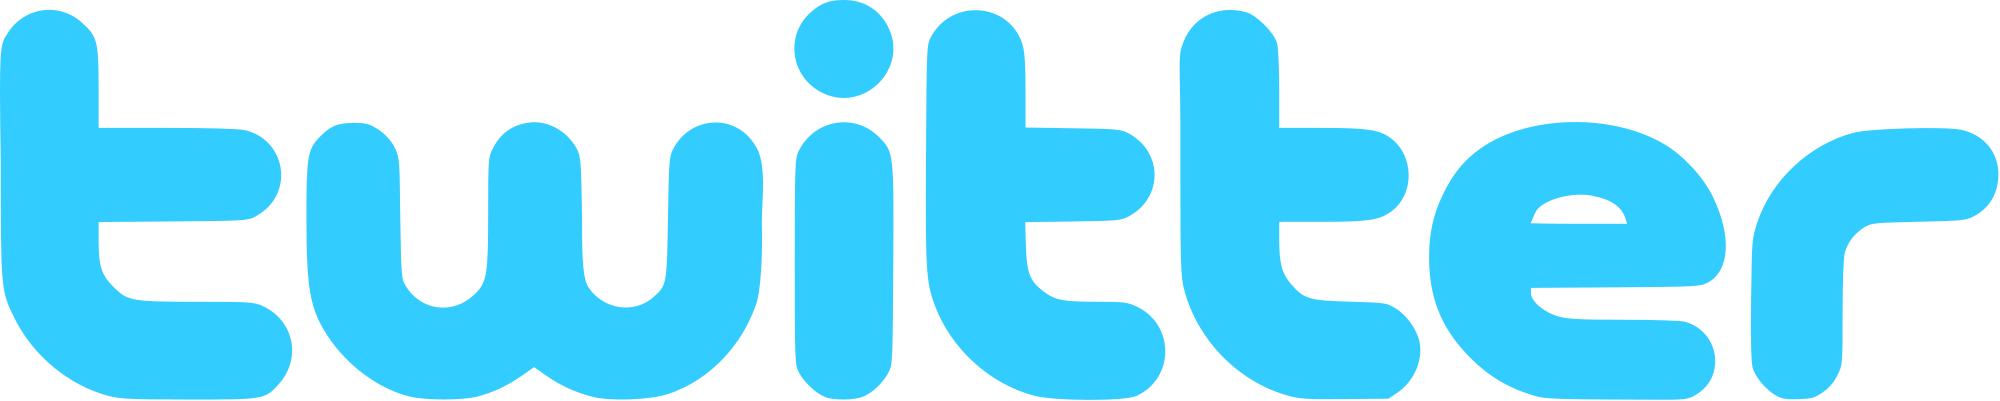 Twitter Logo - File:Twitter logo.svg - Wikimedia Commons